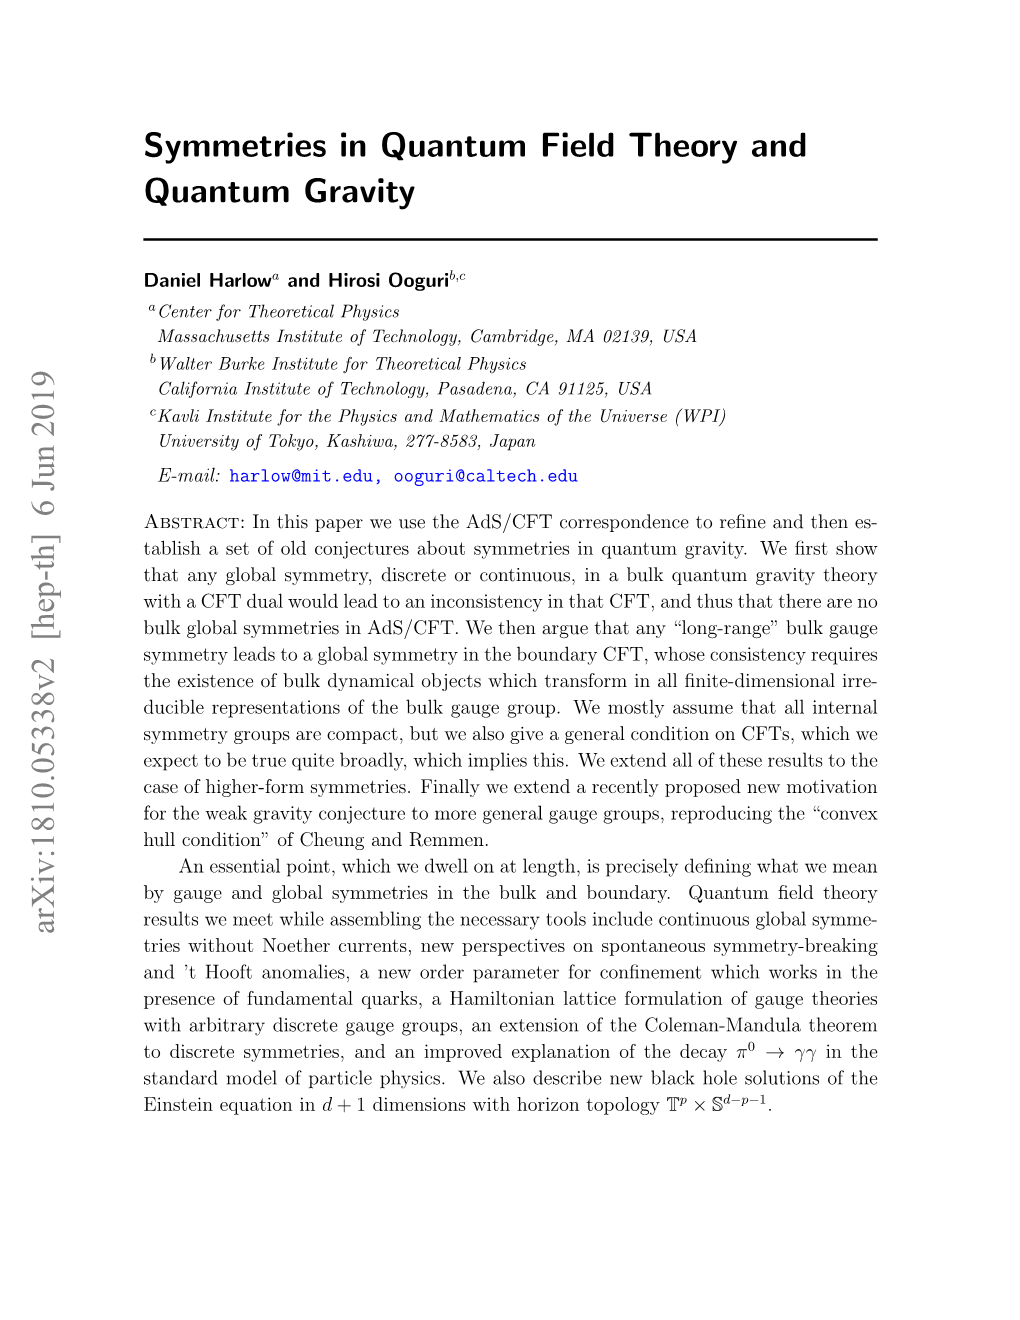 Symmetries in Quantum Field Theory and Quantum Gravity